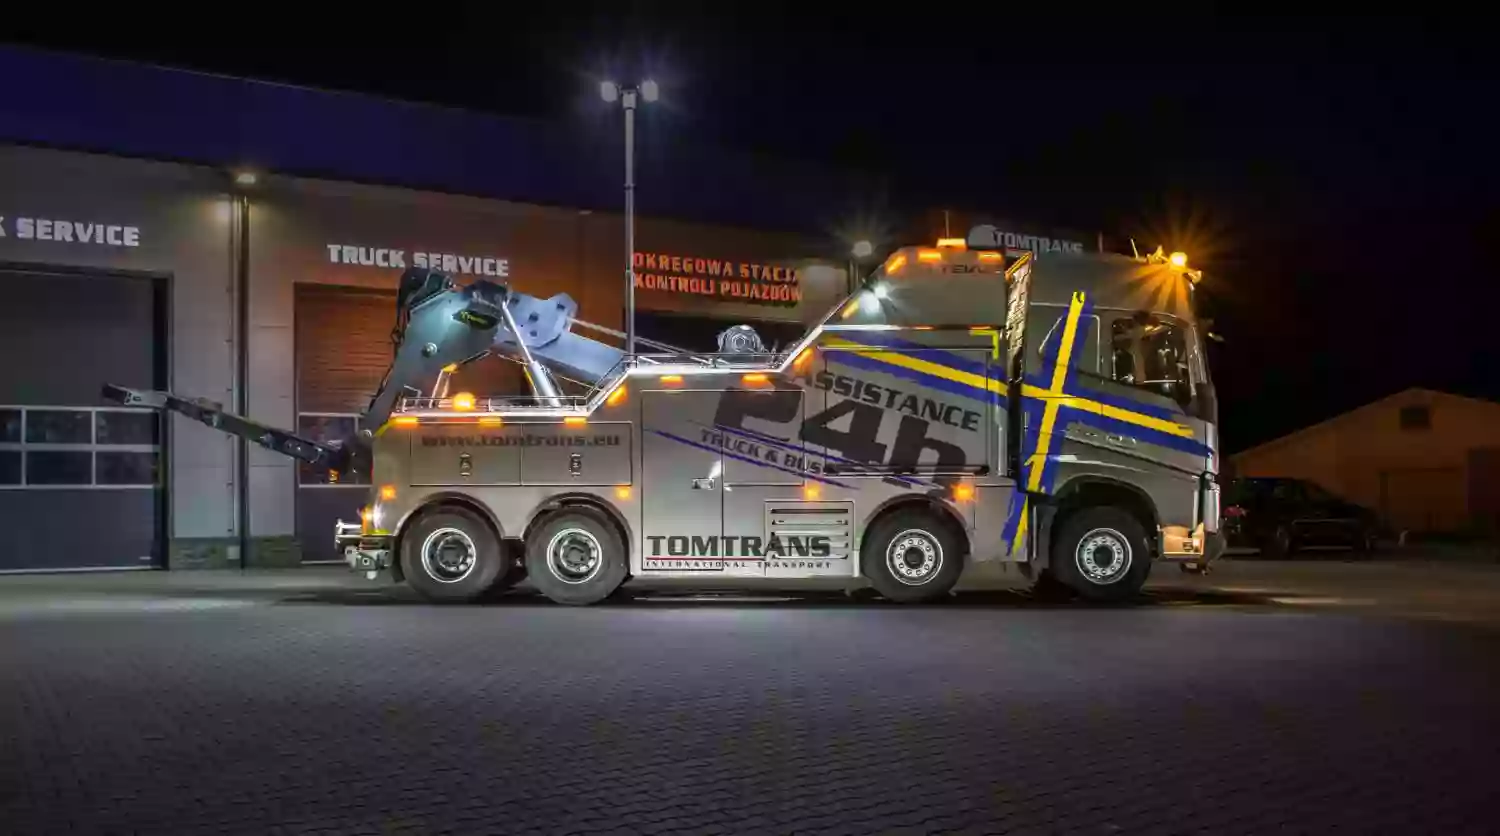 Tomtrans Truck Service